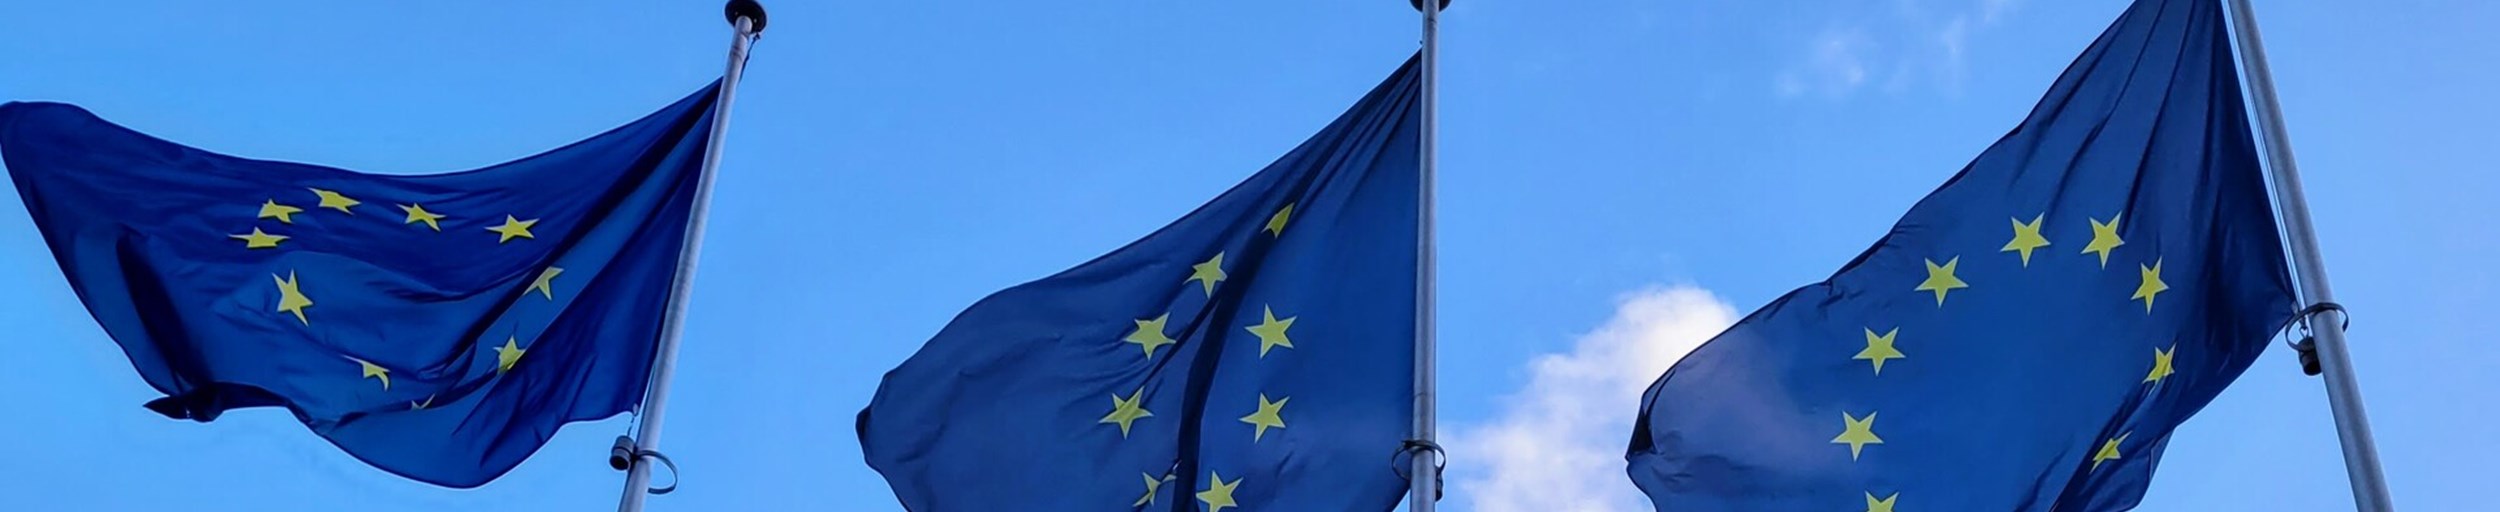 3 EU-Fahnen vor dem blauen, nahezu wolkenfreien Himmel